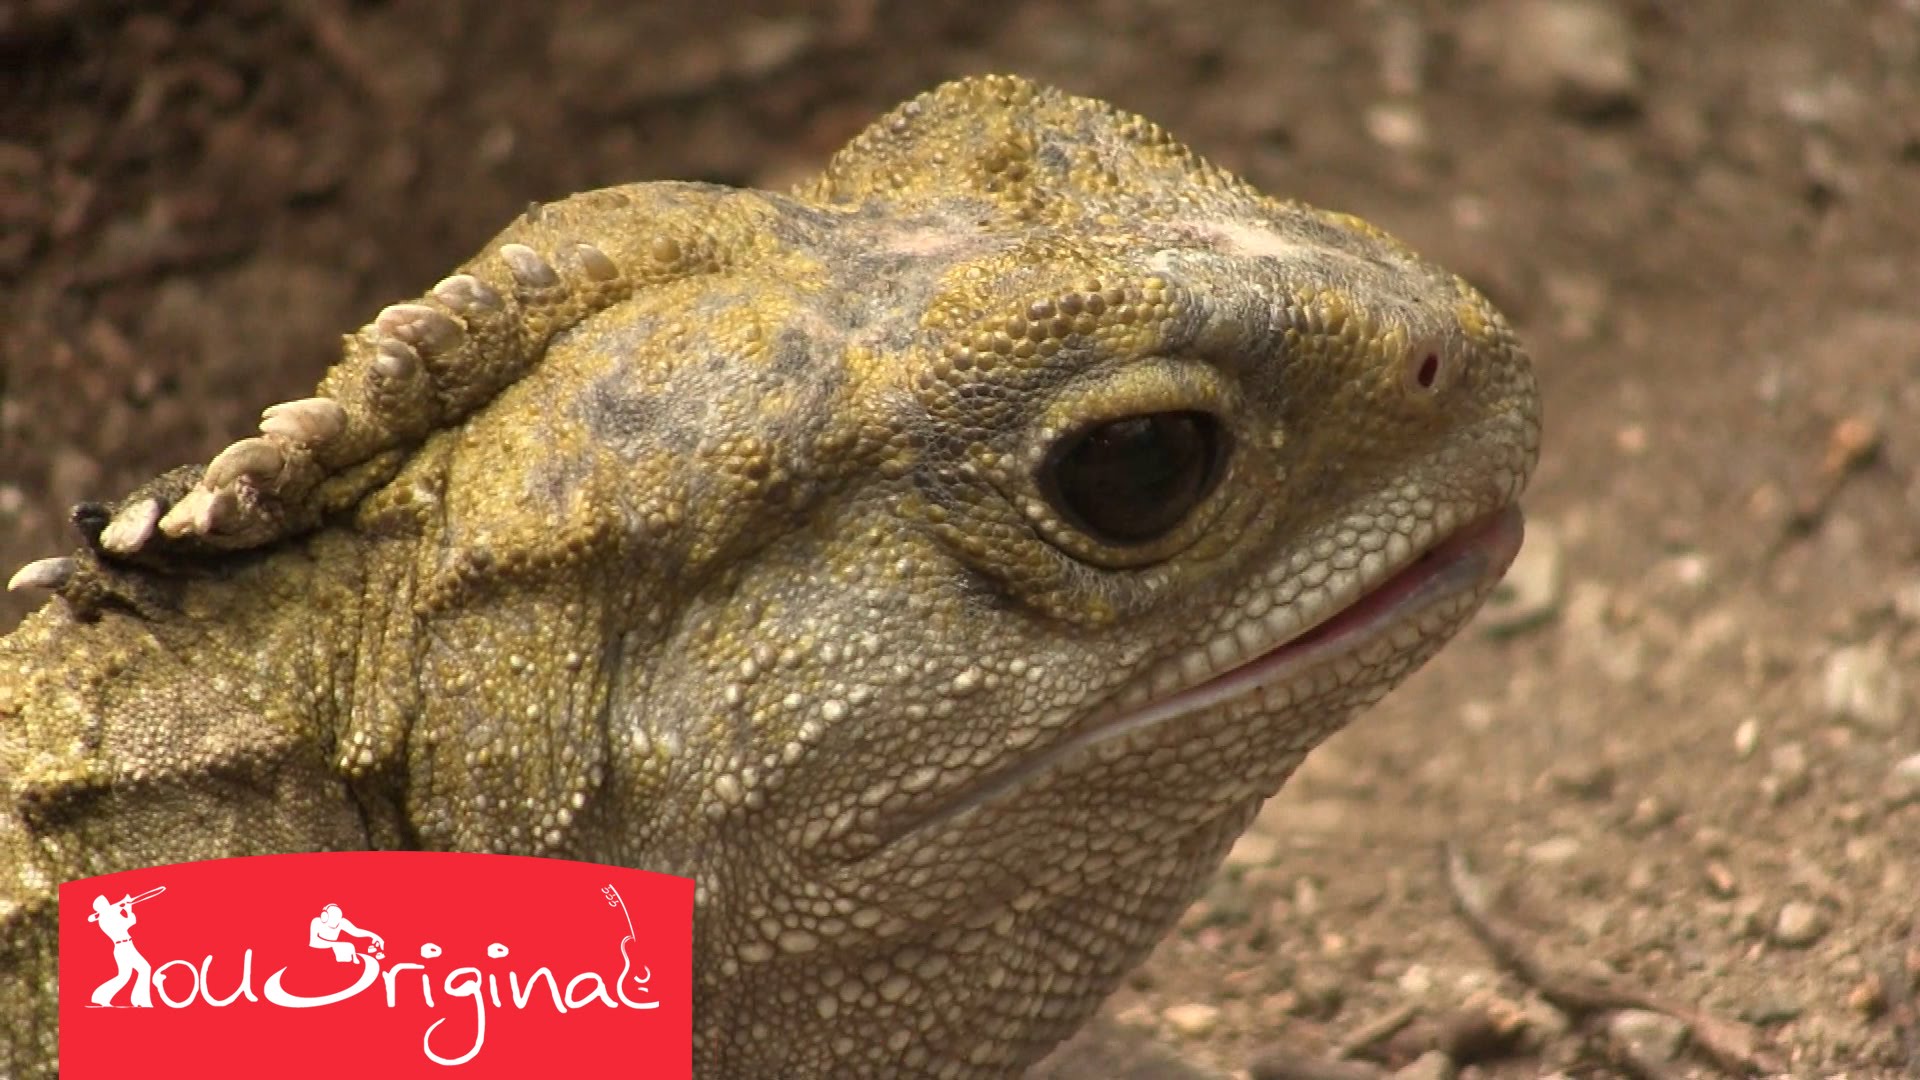 Tuatara Lizard-Like: Is This The Longest Living Reptile? – Cobras.org